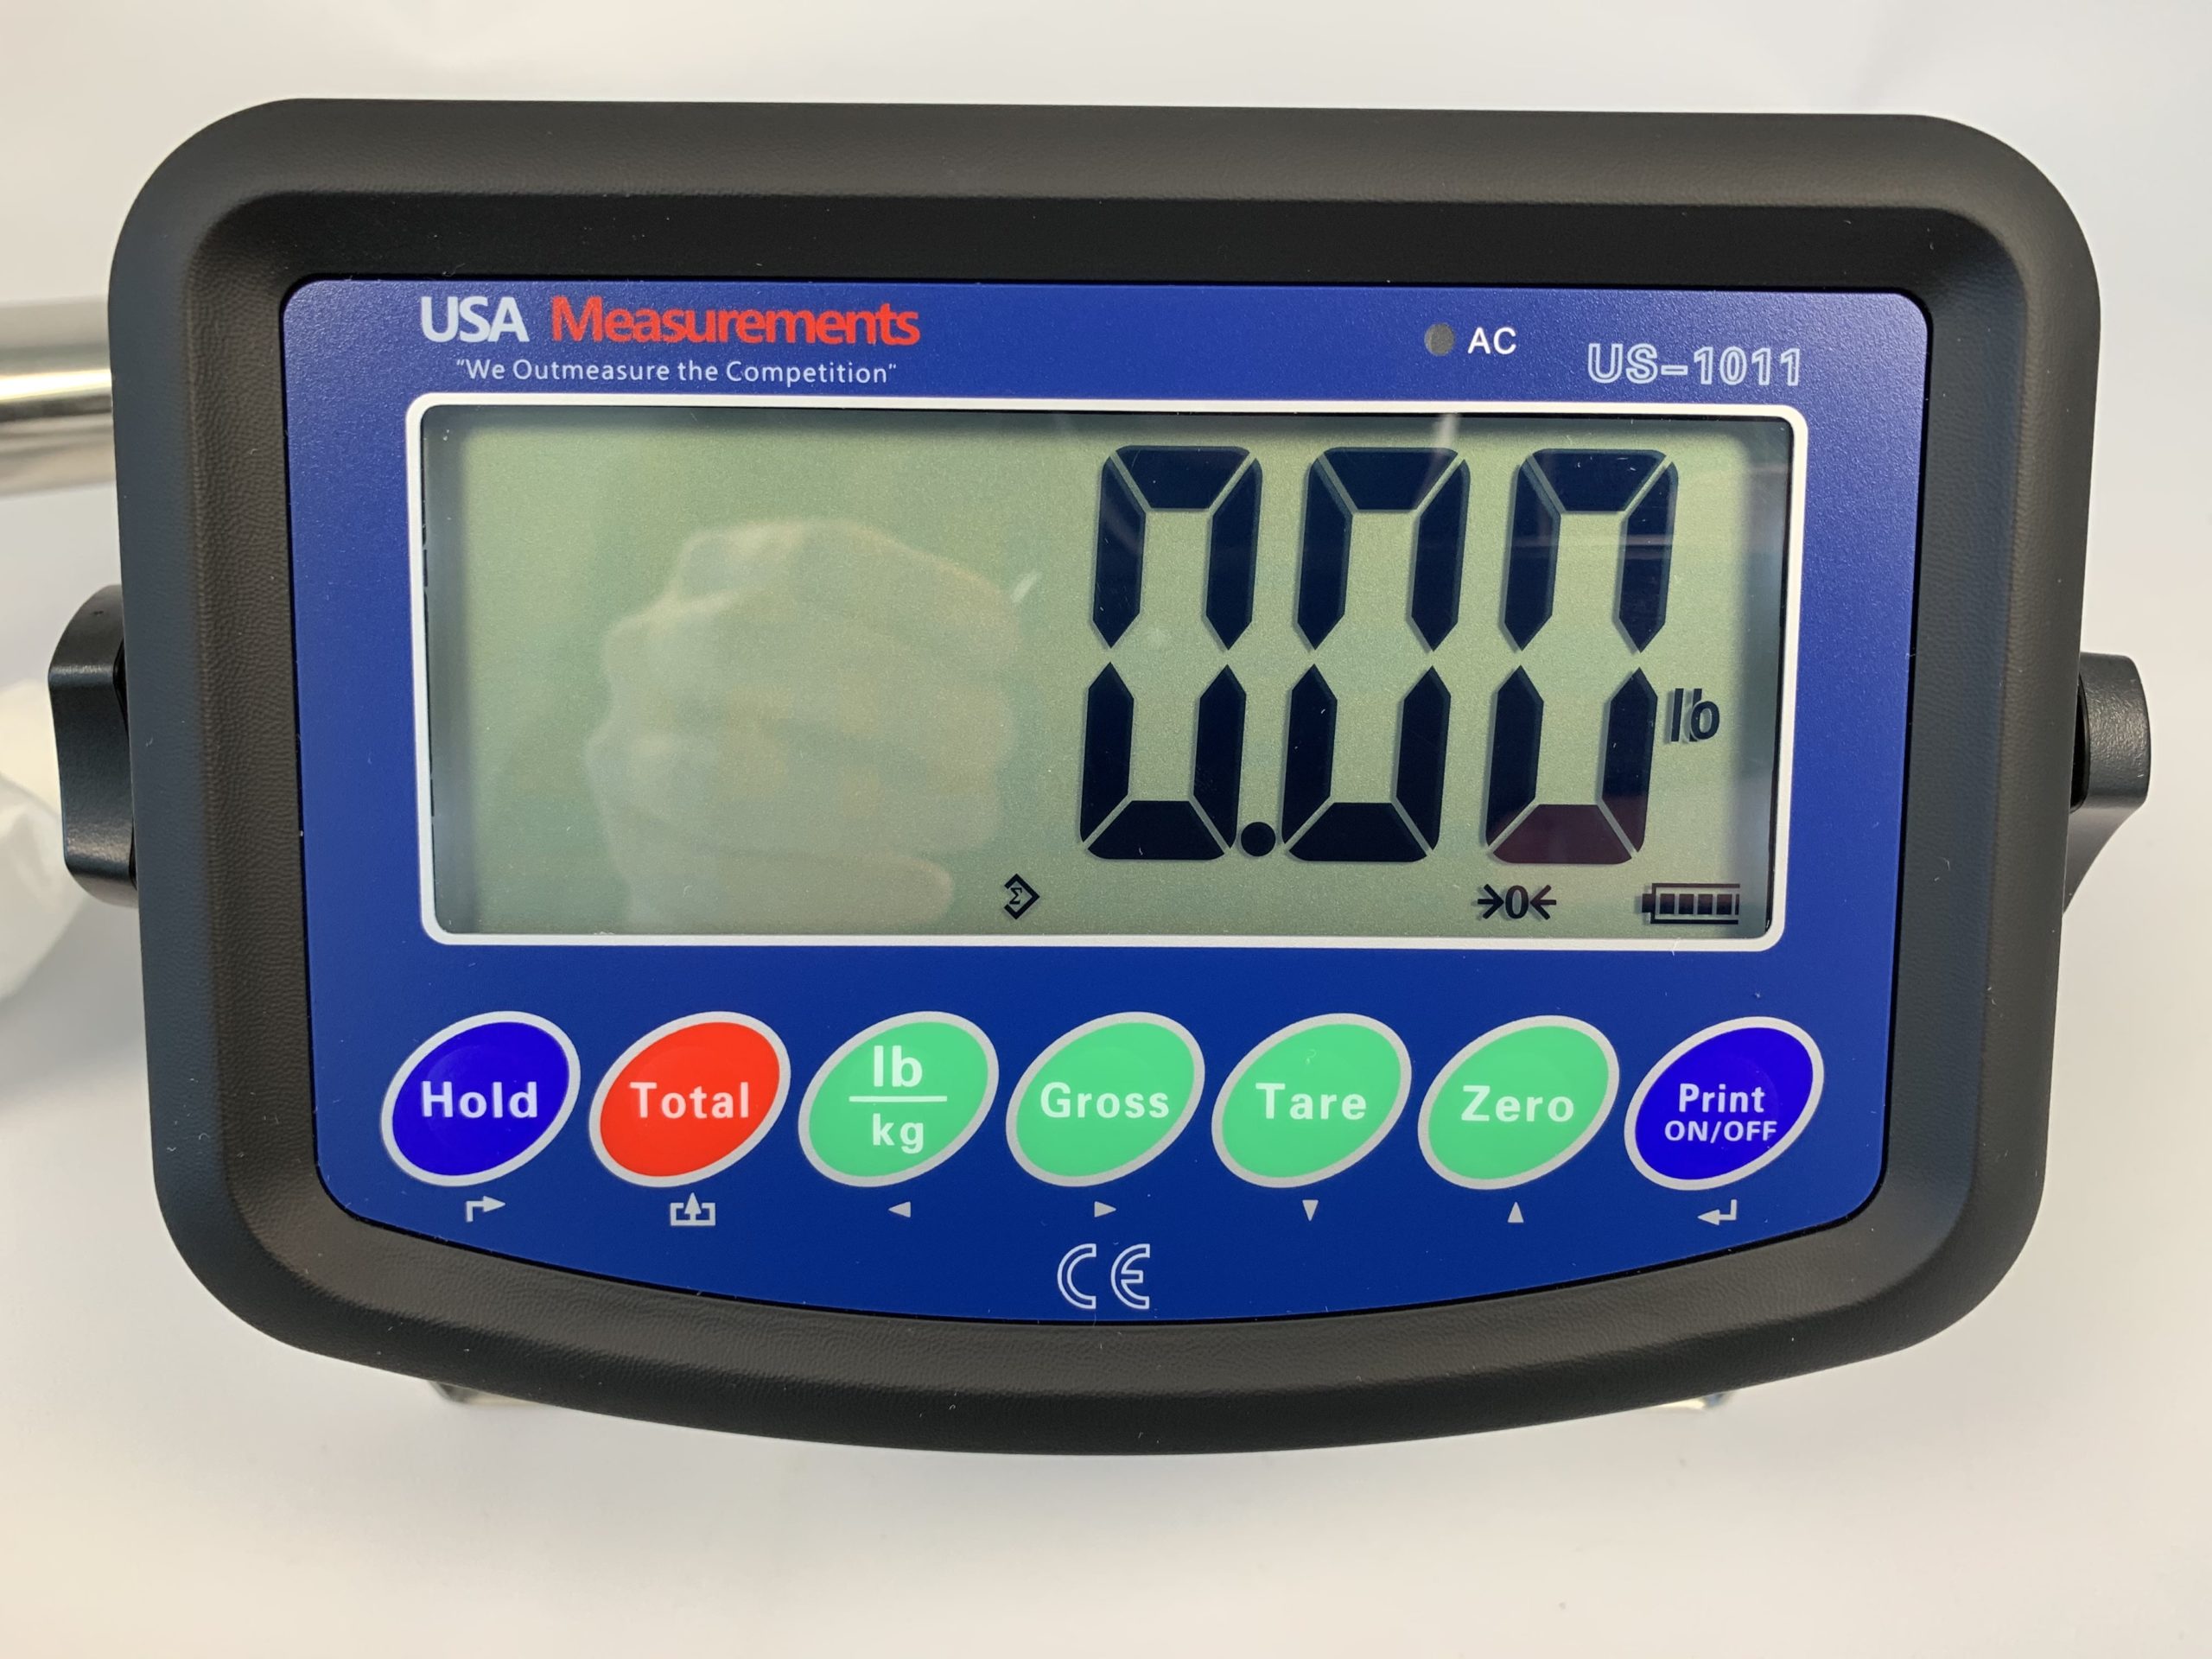 US-7011 Digital Indicator with LCD Display - USA Measurements